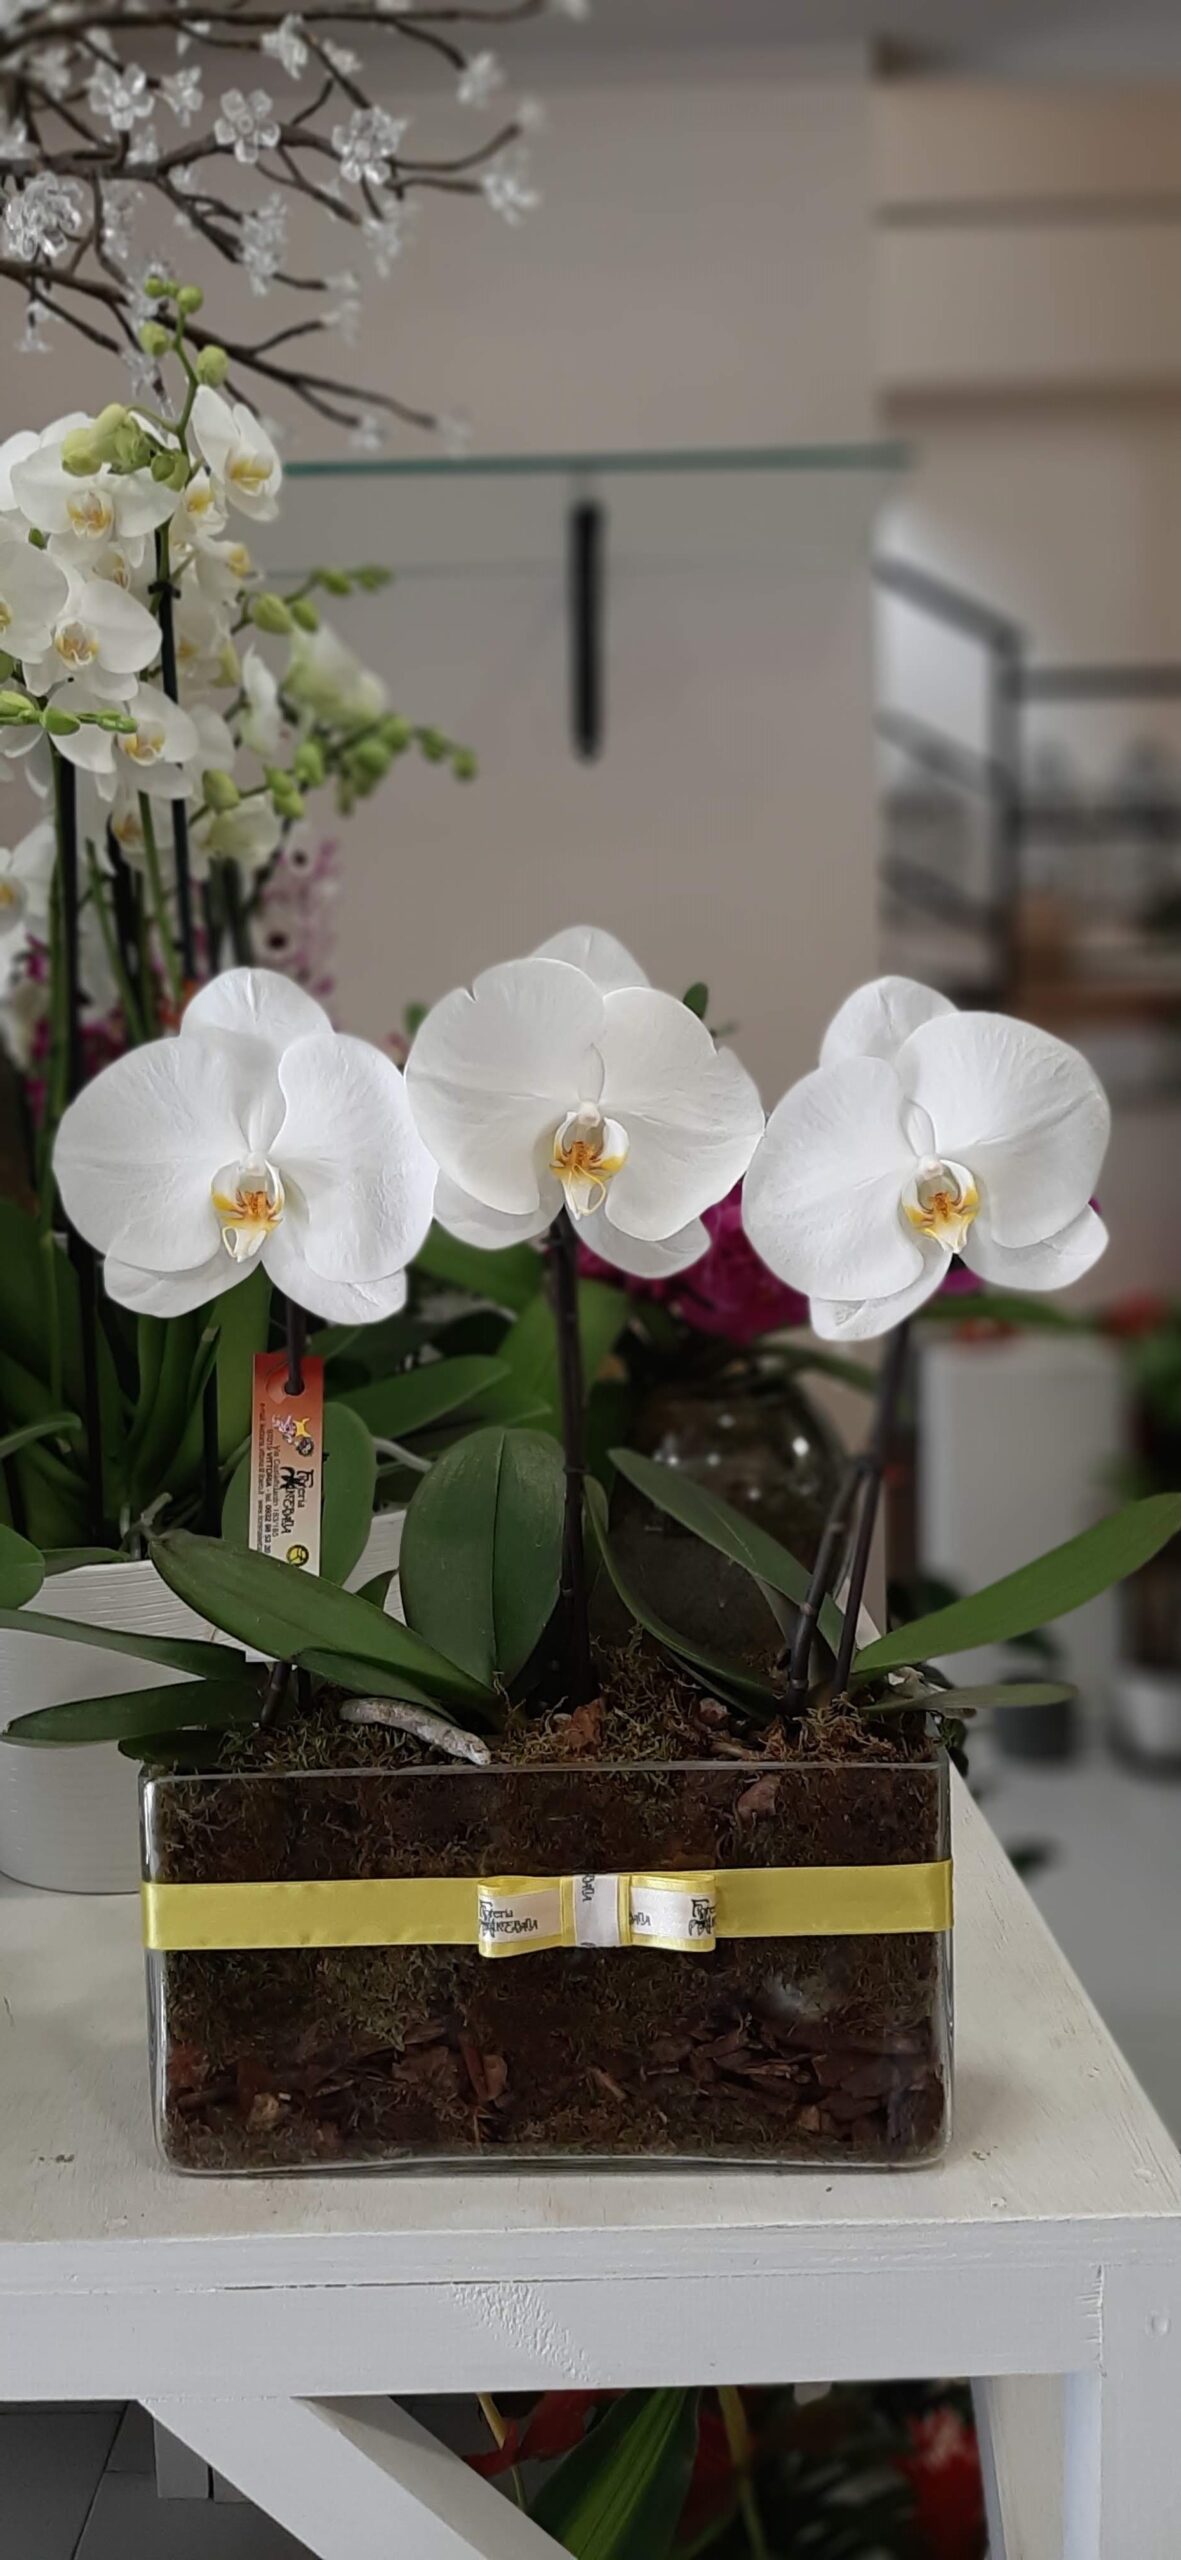 Composizione di orchidee artificiali in vaso di vetro H37cm - Bianco -  Atmosphera créateur d'intérieur